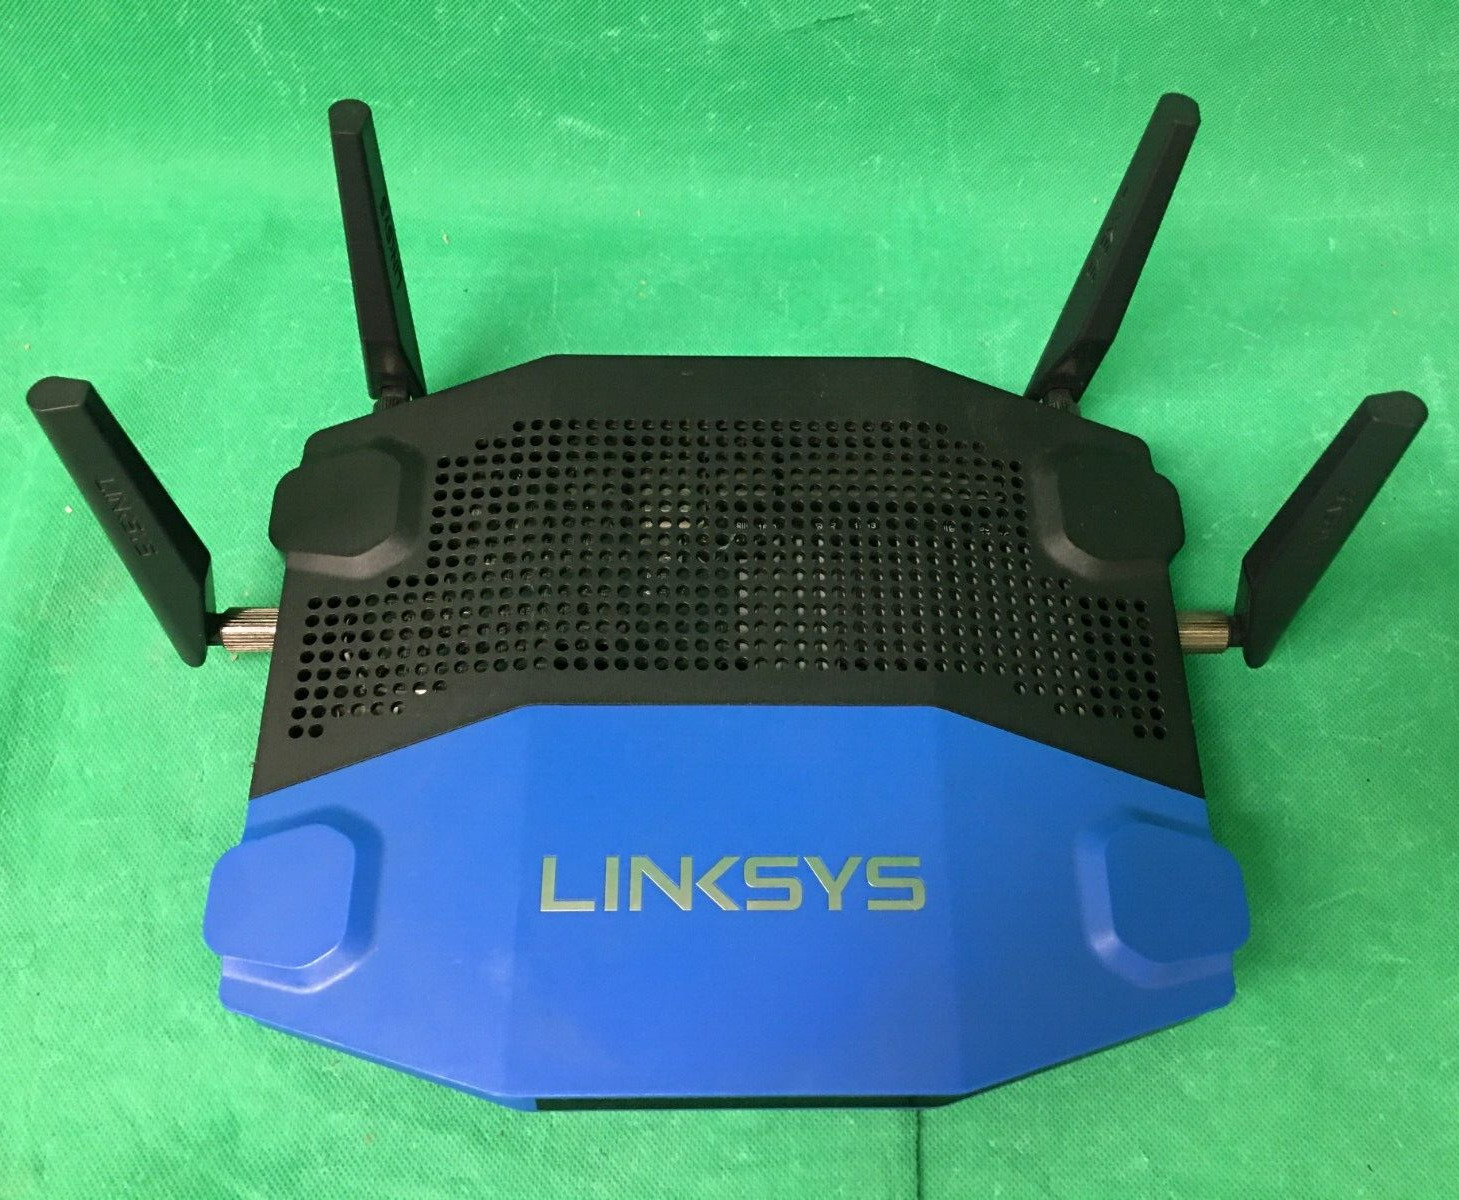 Linksys WRT3200ACM AC3200 Dual-Band Gigabit Wi-Fi Router *PLEASE READ CAREFULLY*